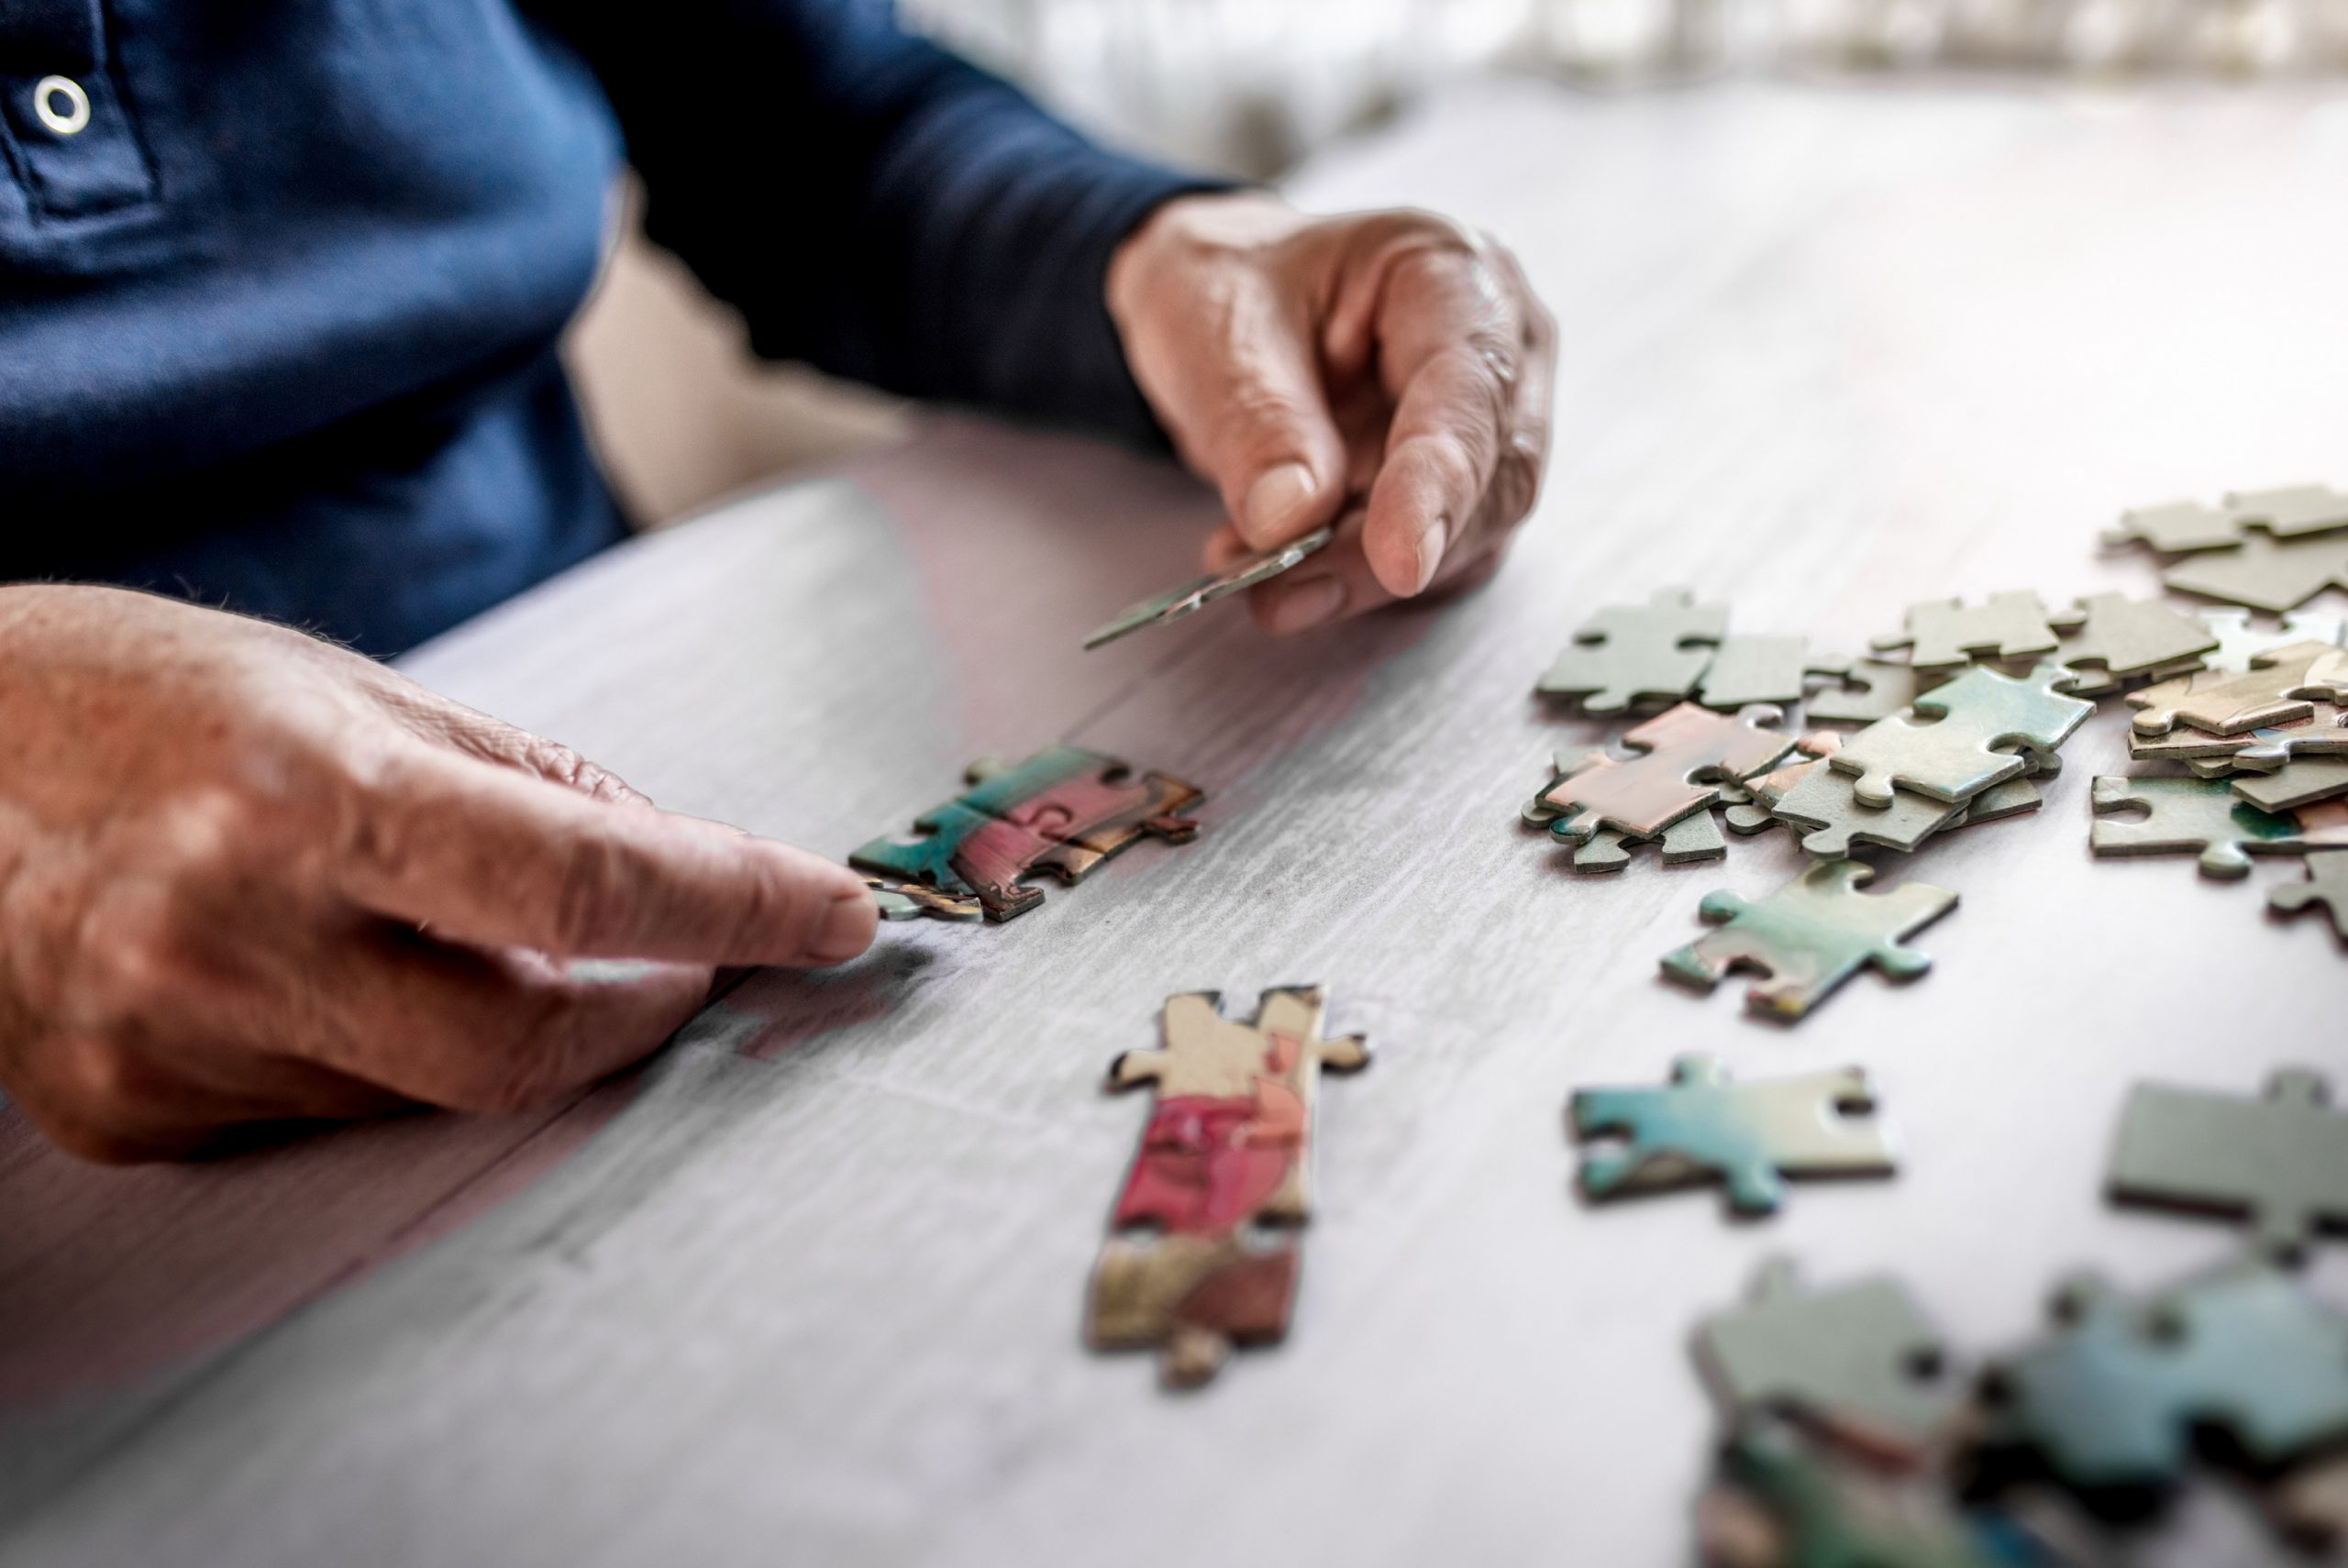 Games like jigsaw puzzles or sudoku stimulate neuroplasticity